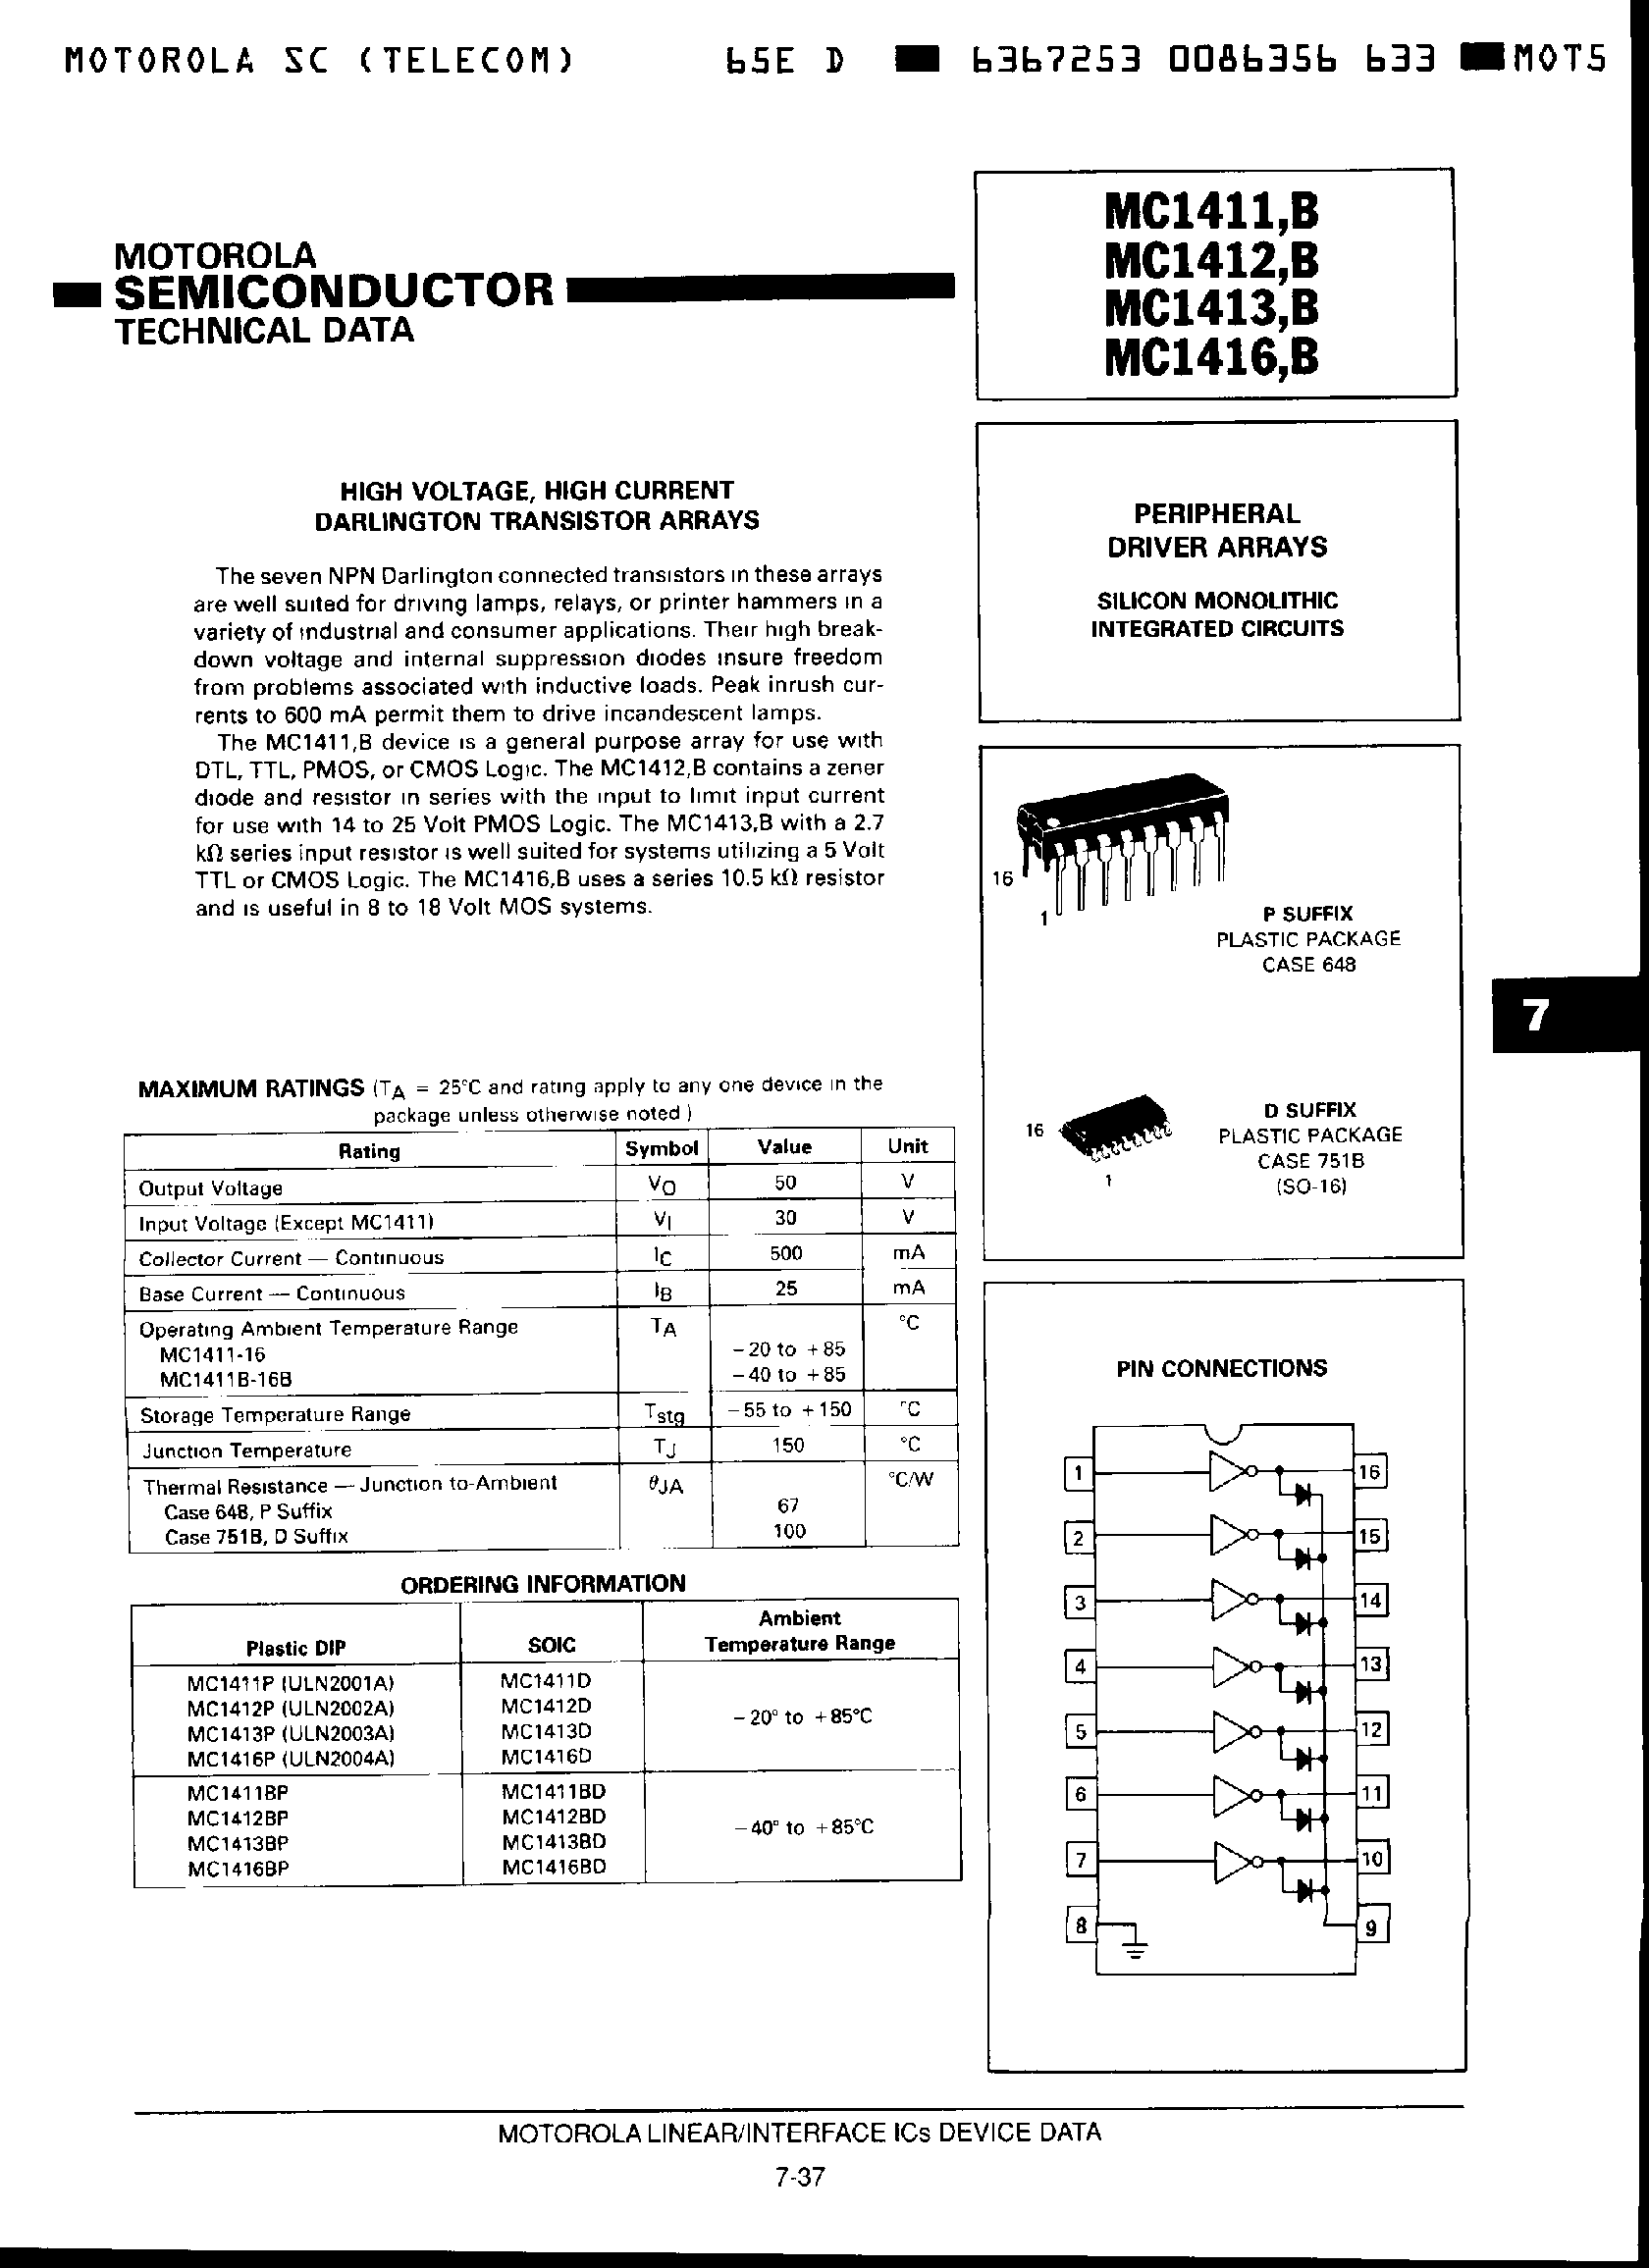 Datasheet MC1416D - PERIPHERAL DRIVER ARRAYS page 1